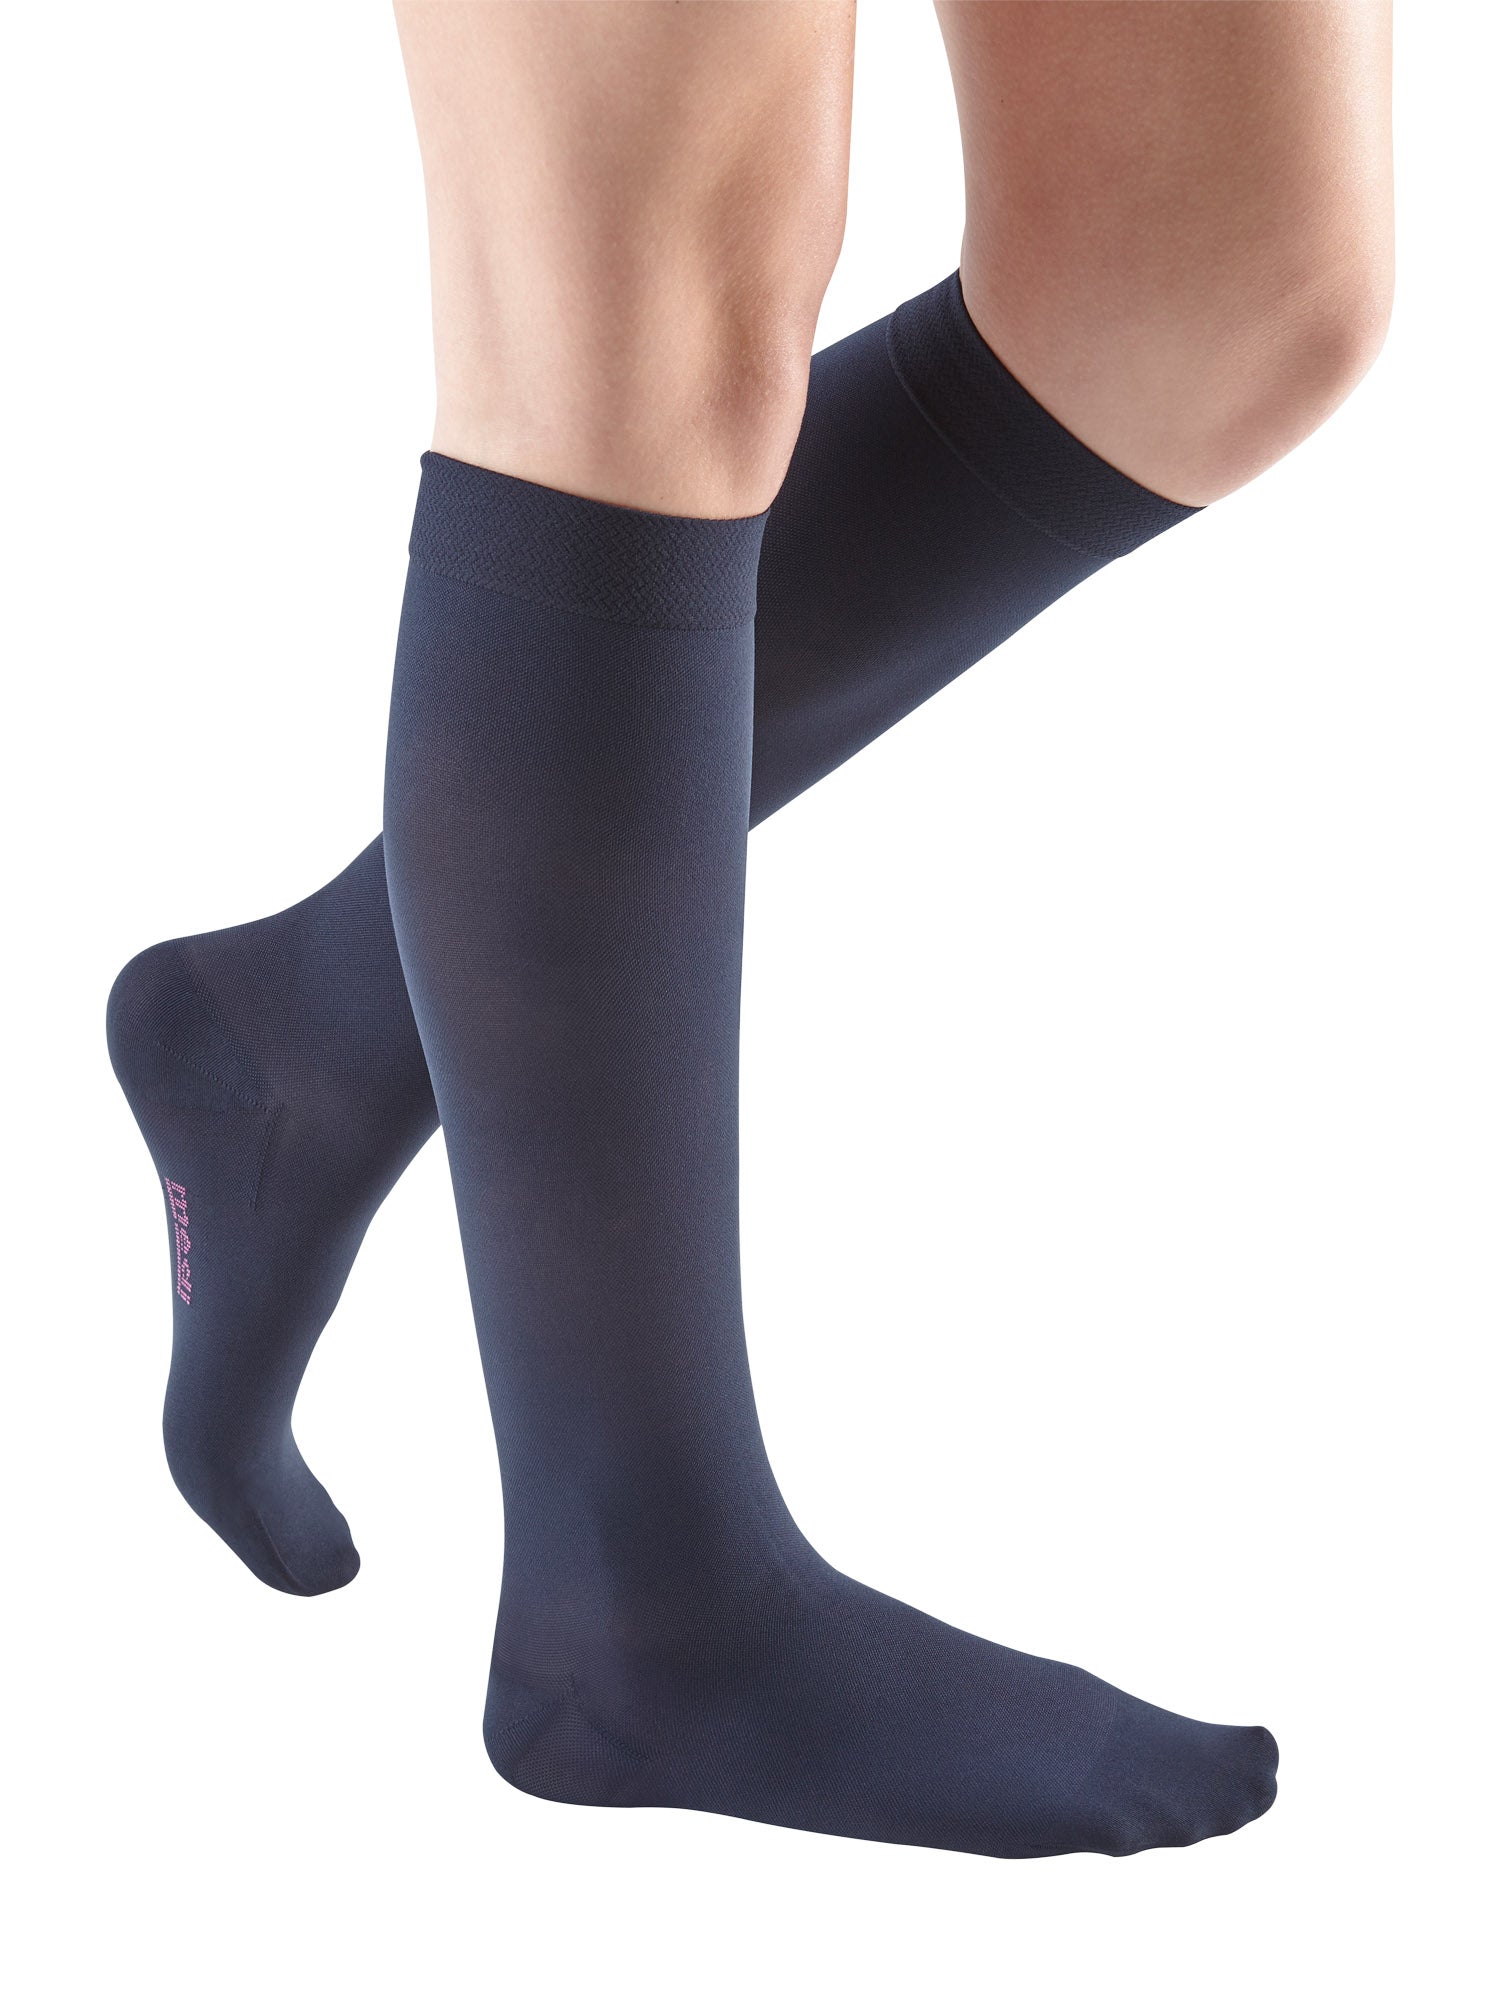 Mediven Closed Toe Knee High Compression Stockings (Medium Compression 15-20 mmHg)